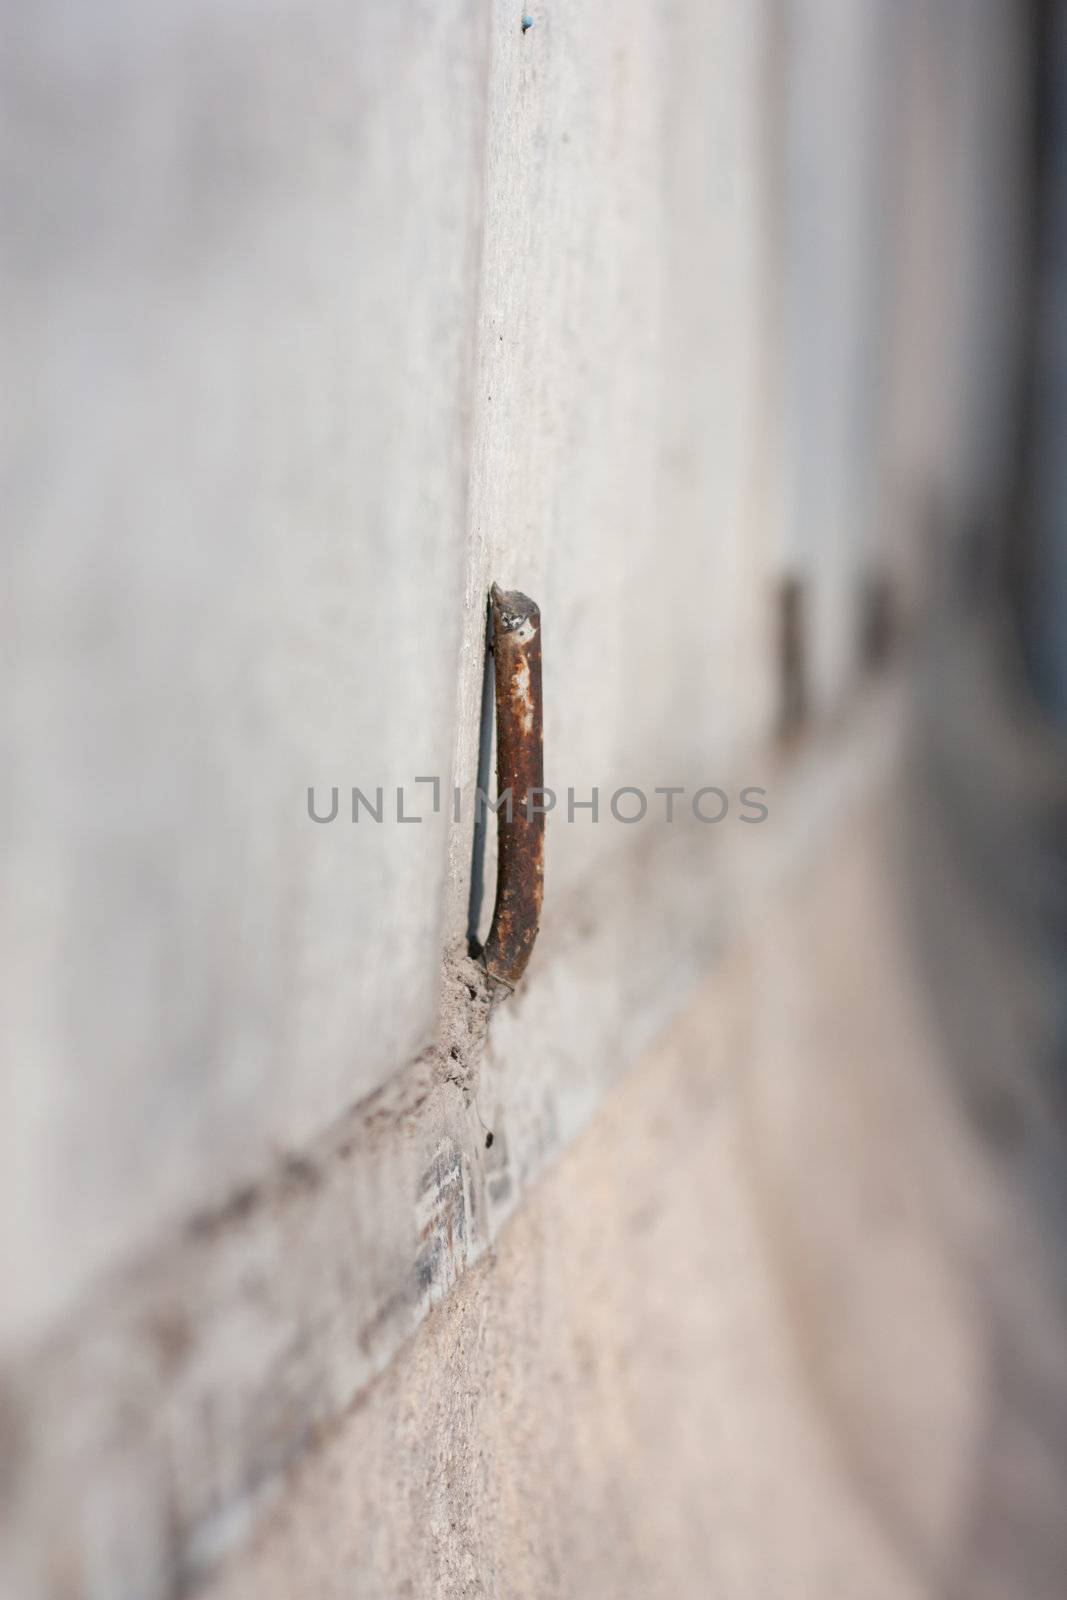 rusty pin on the concrete wall by schankz